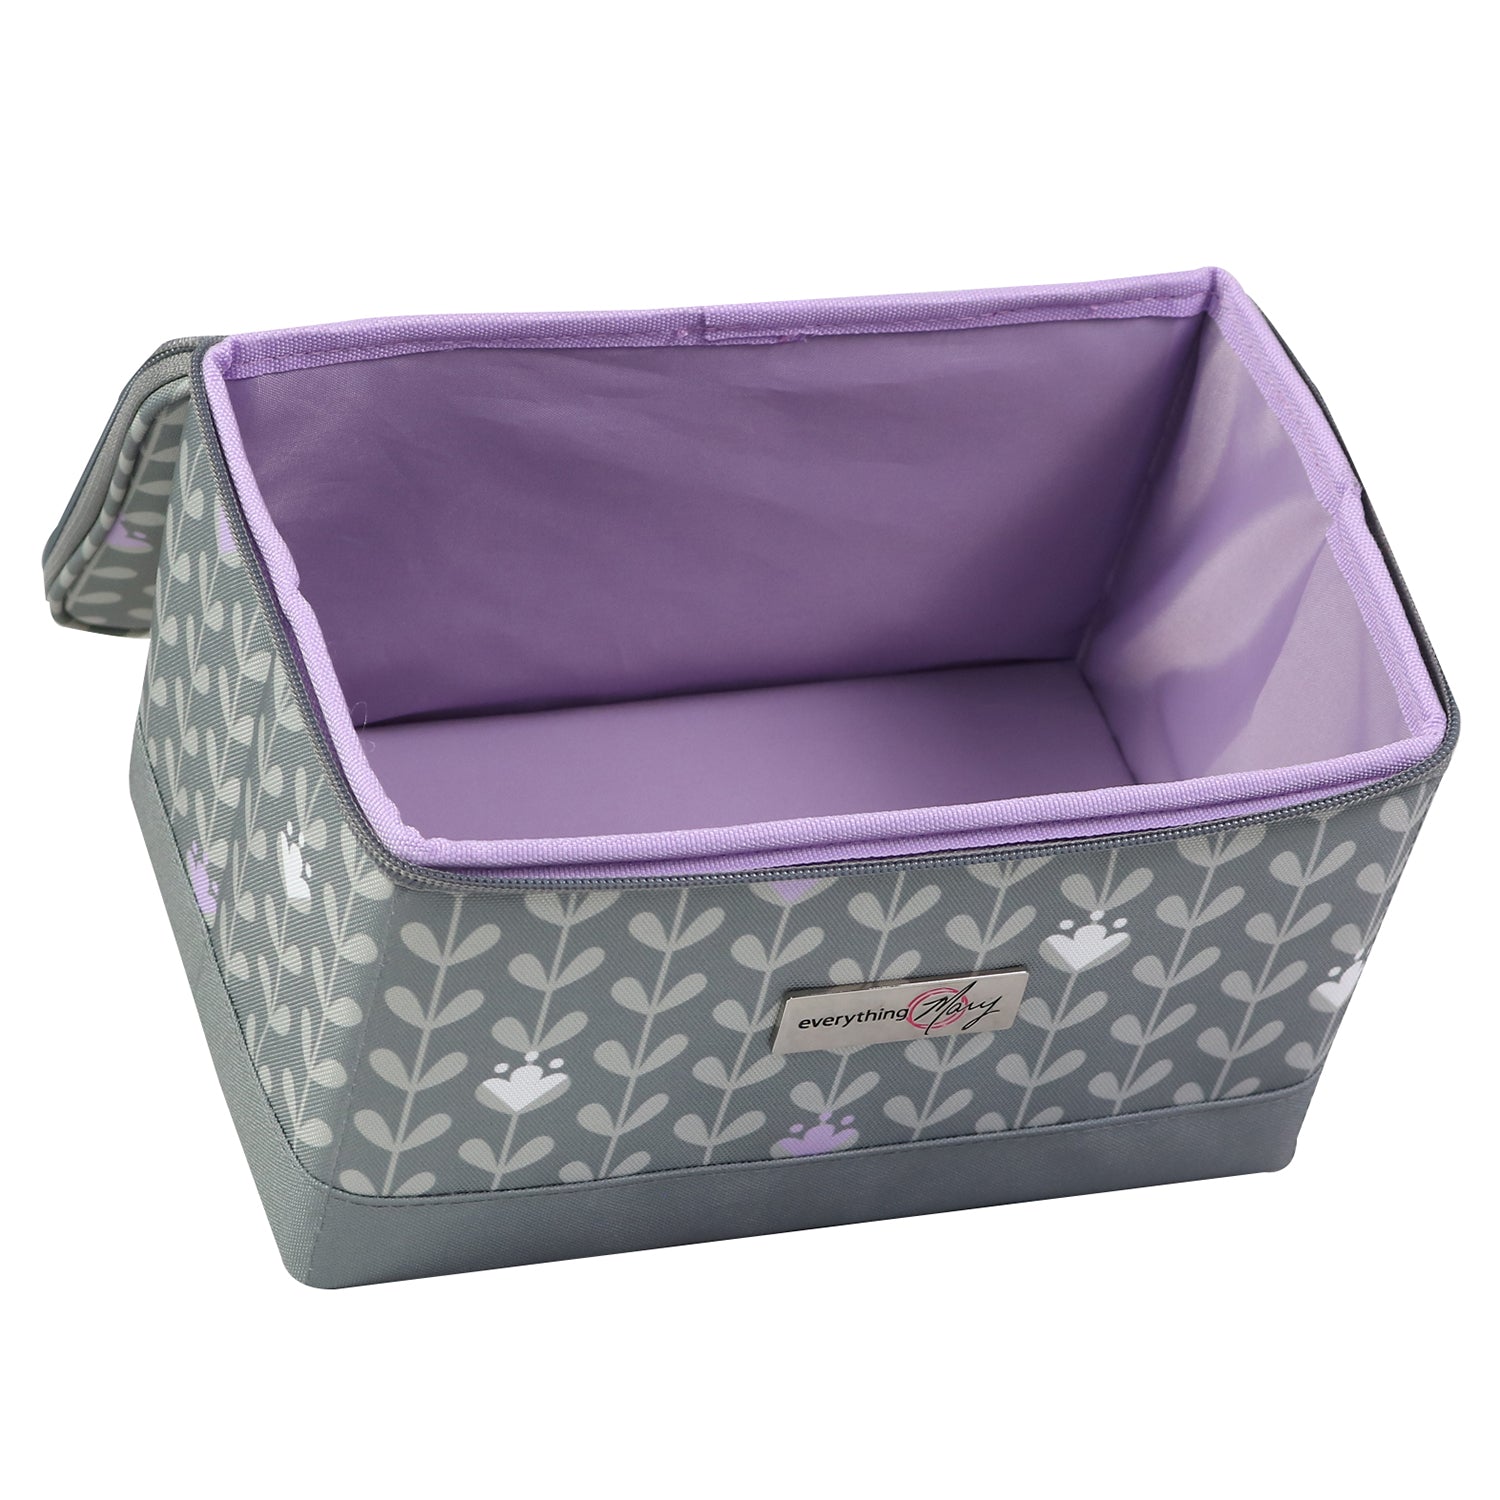 Everything Mary Purple Sewing Kit Organizer Box